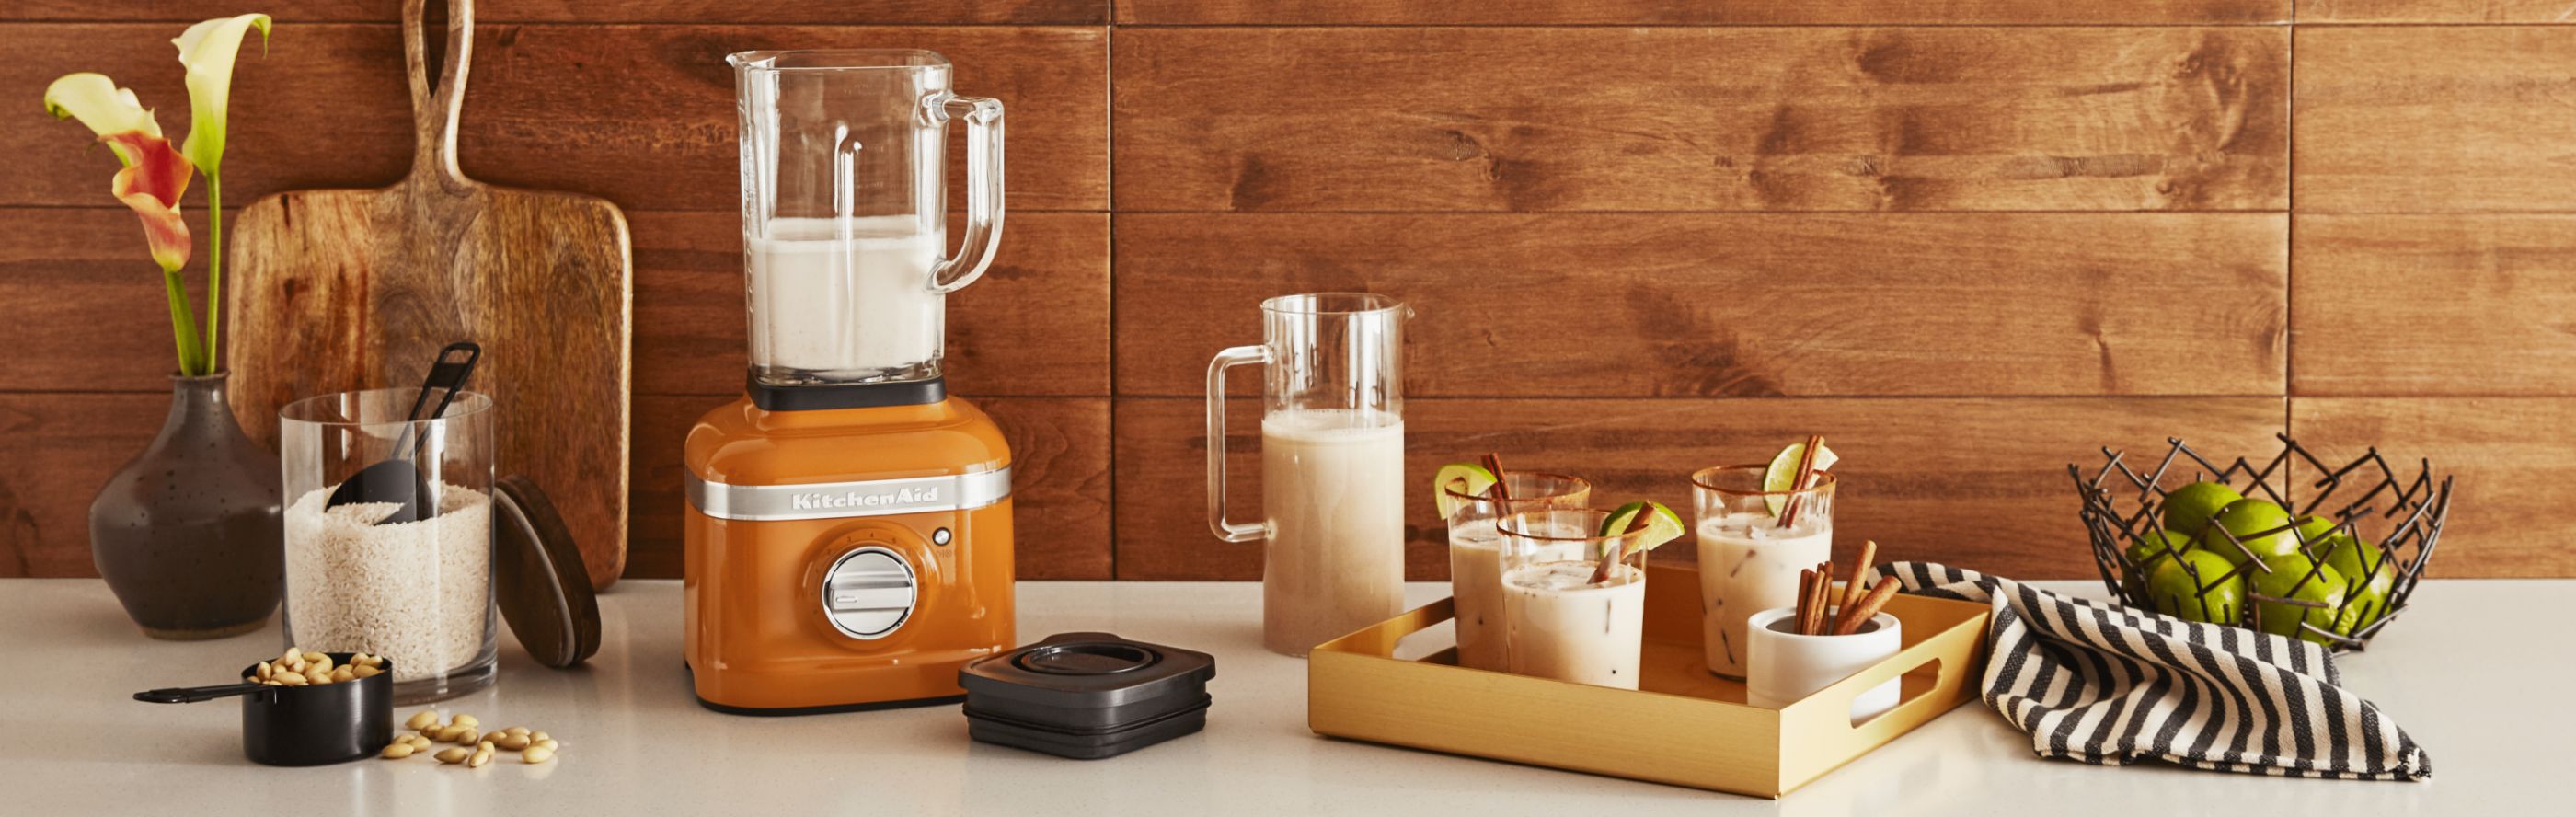 KitchenAid® blender with orange base half-filled with almond milk